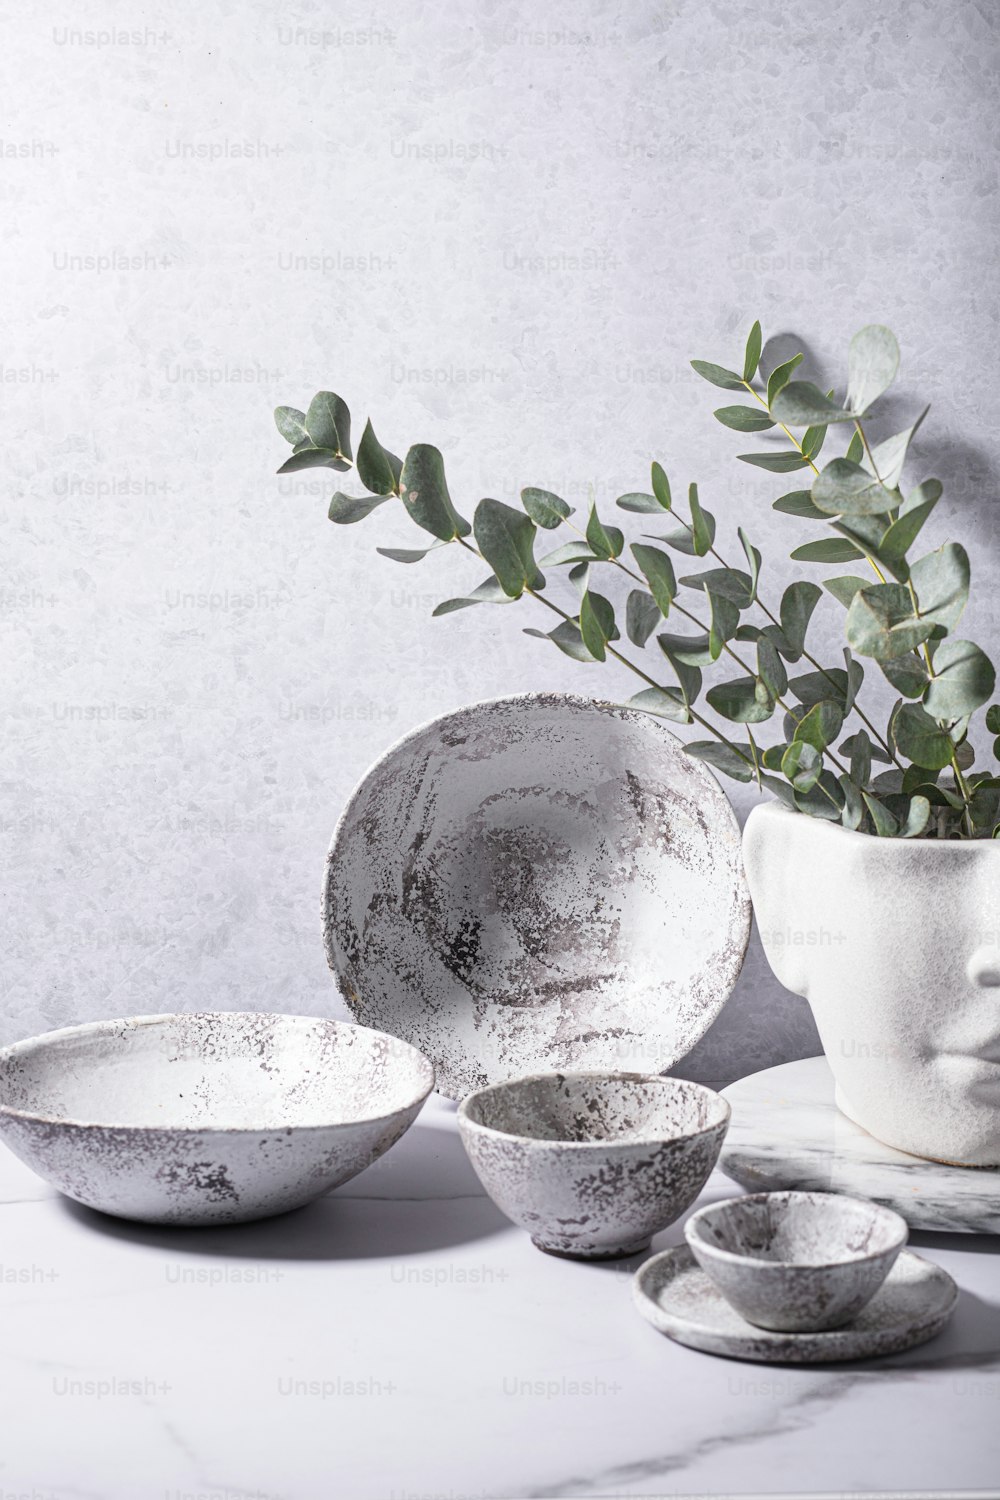 un vaso bianco riempito con una pianta verde accanto a un piatto bianco